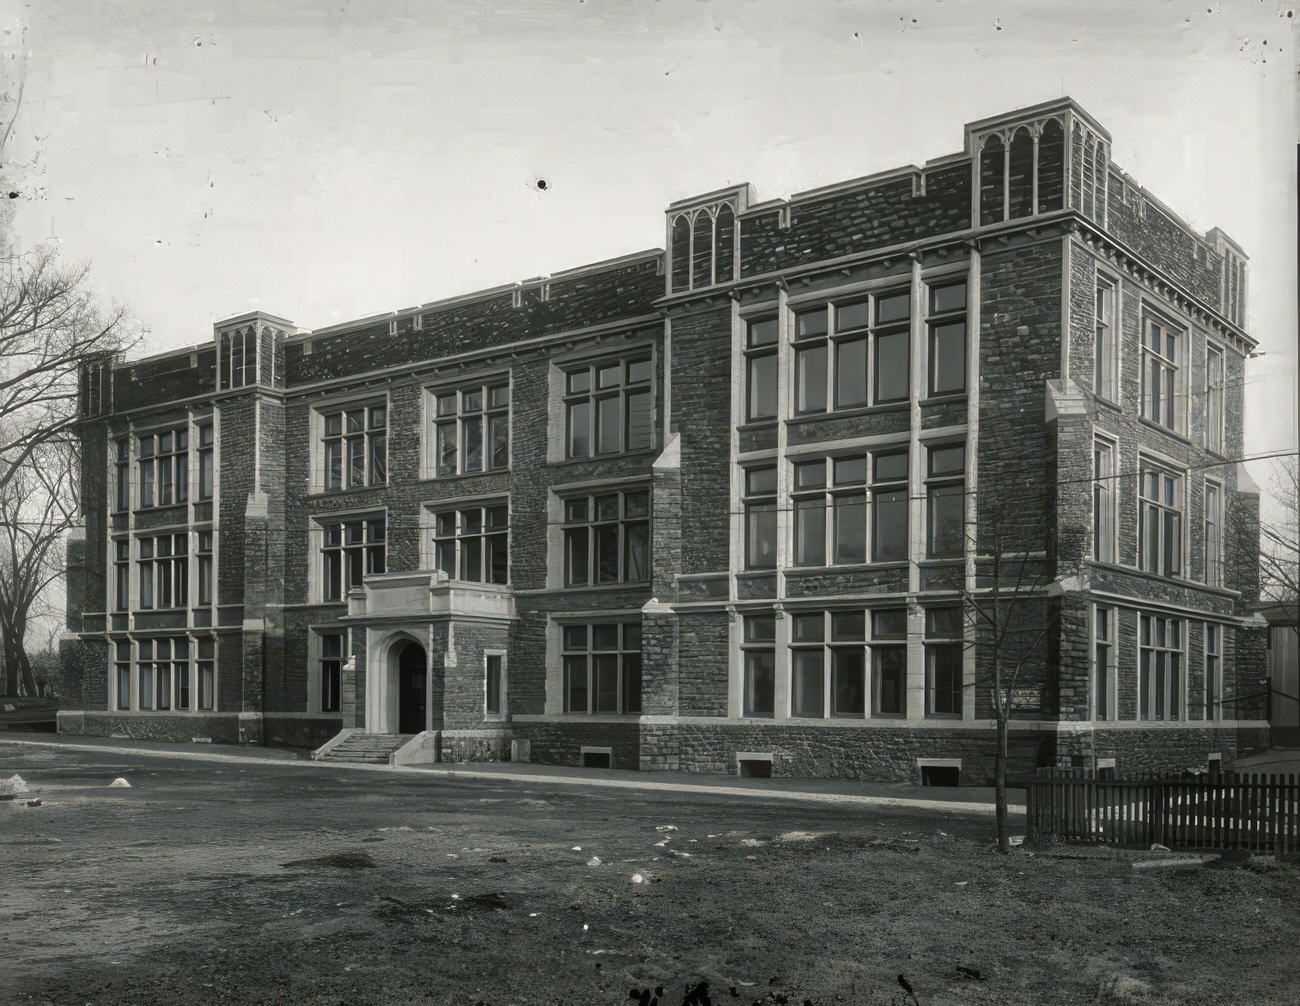 Bathgate Avenue, Fordham University Medical College, Circa 1910.